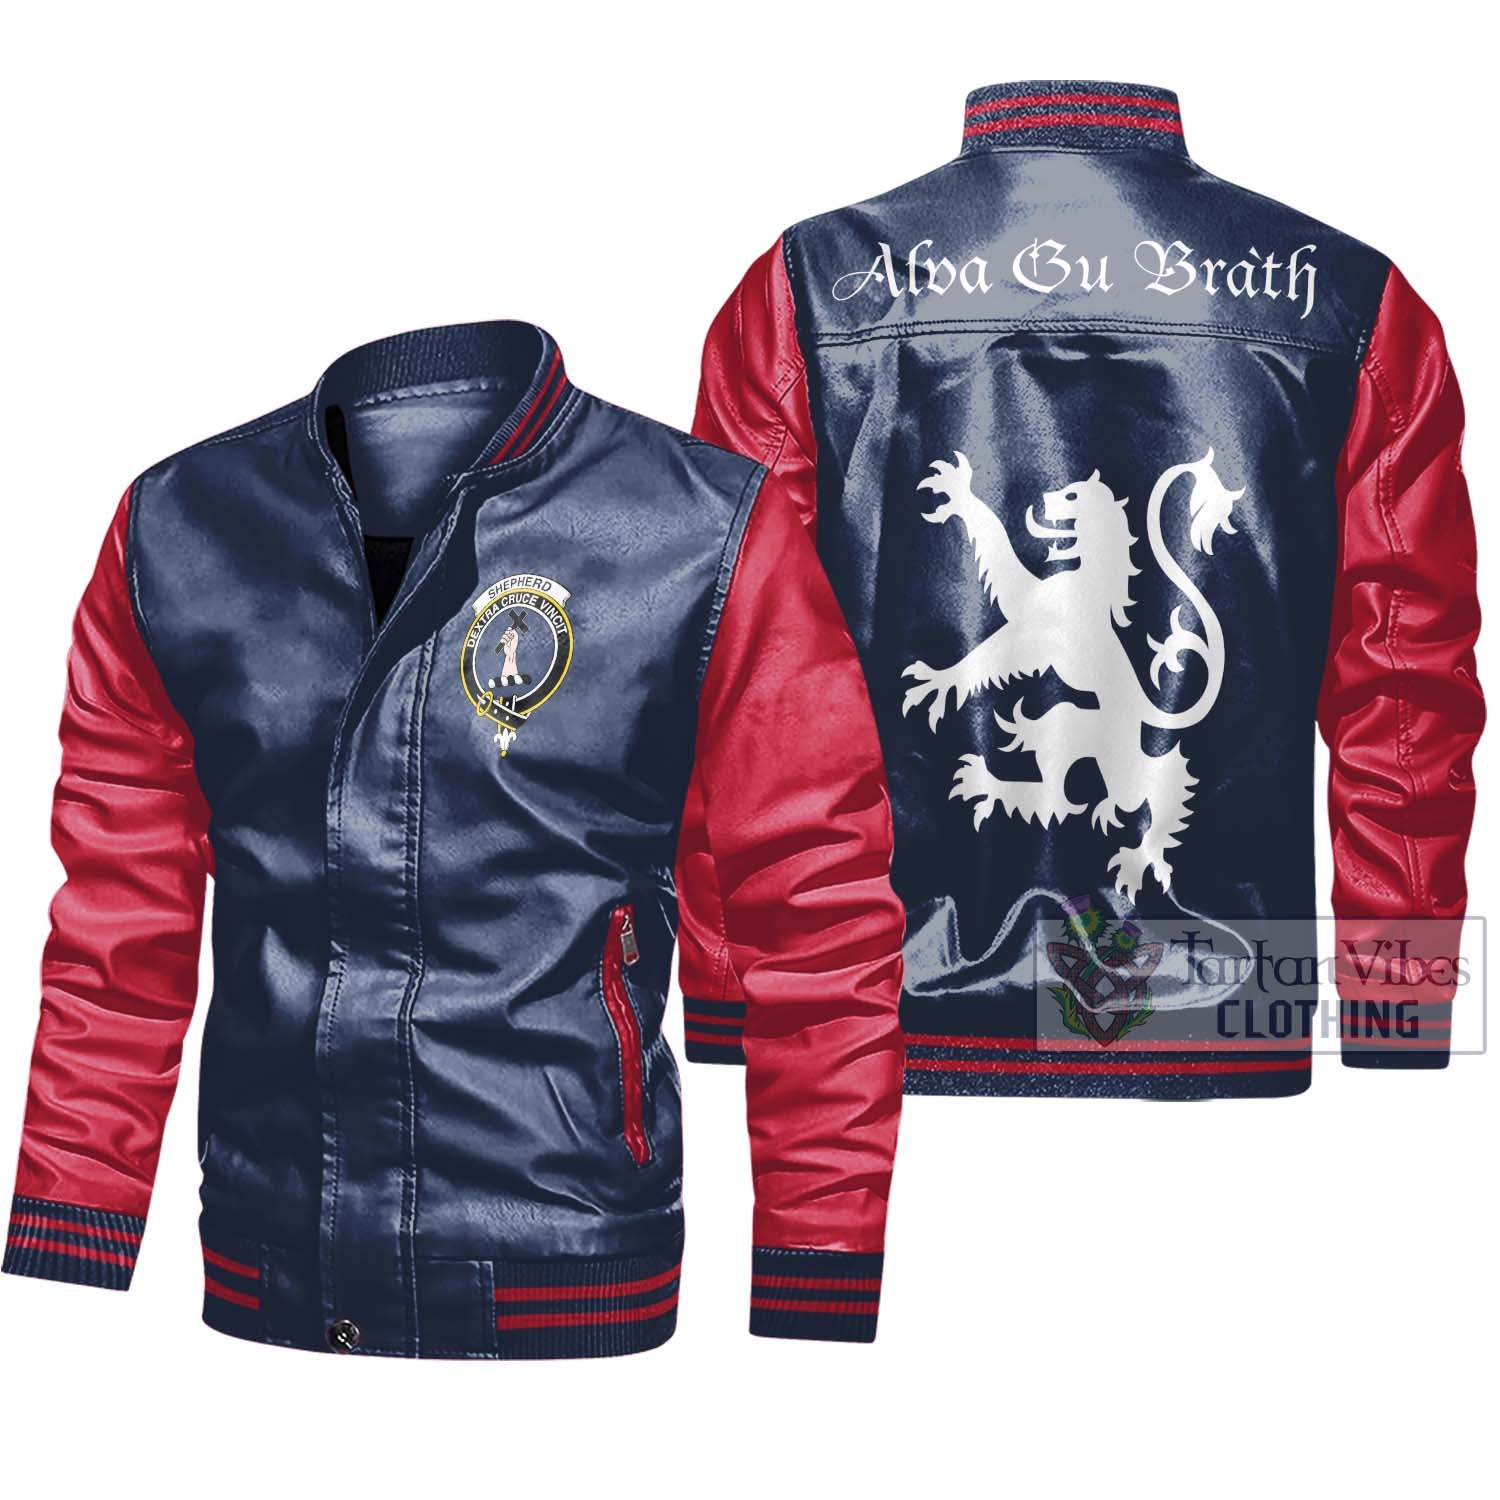 Tartan Vibes Clothing Shepherd Family Crest Leather Bomber Jacket Lion Rampant Alba Gu Brath Style